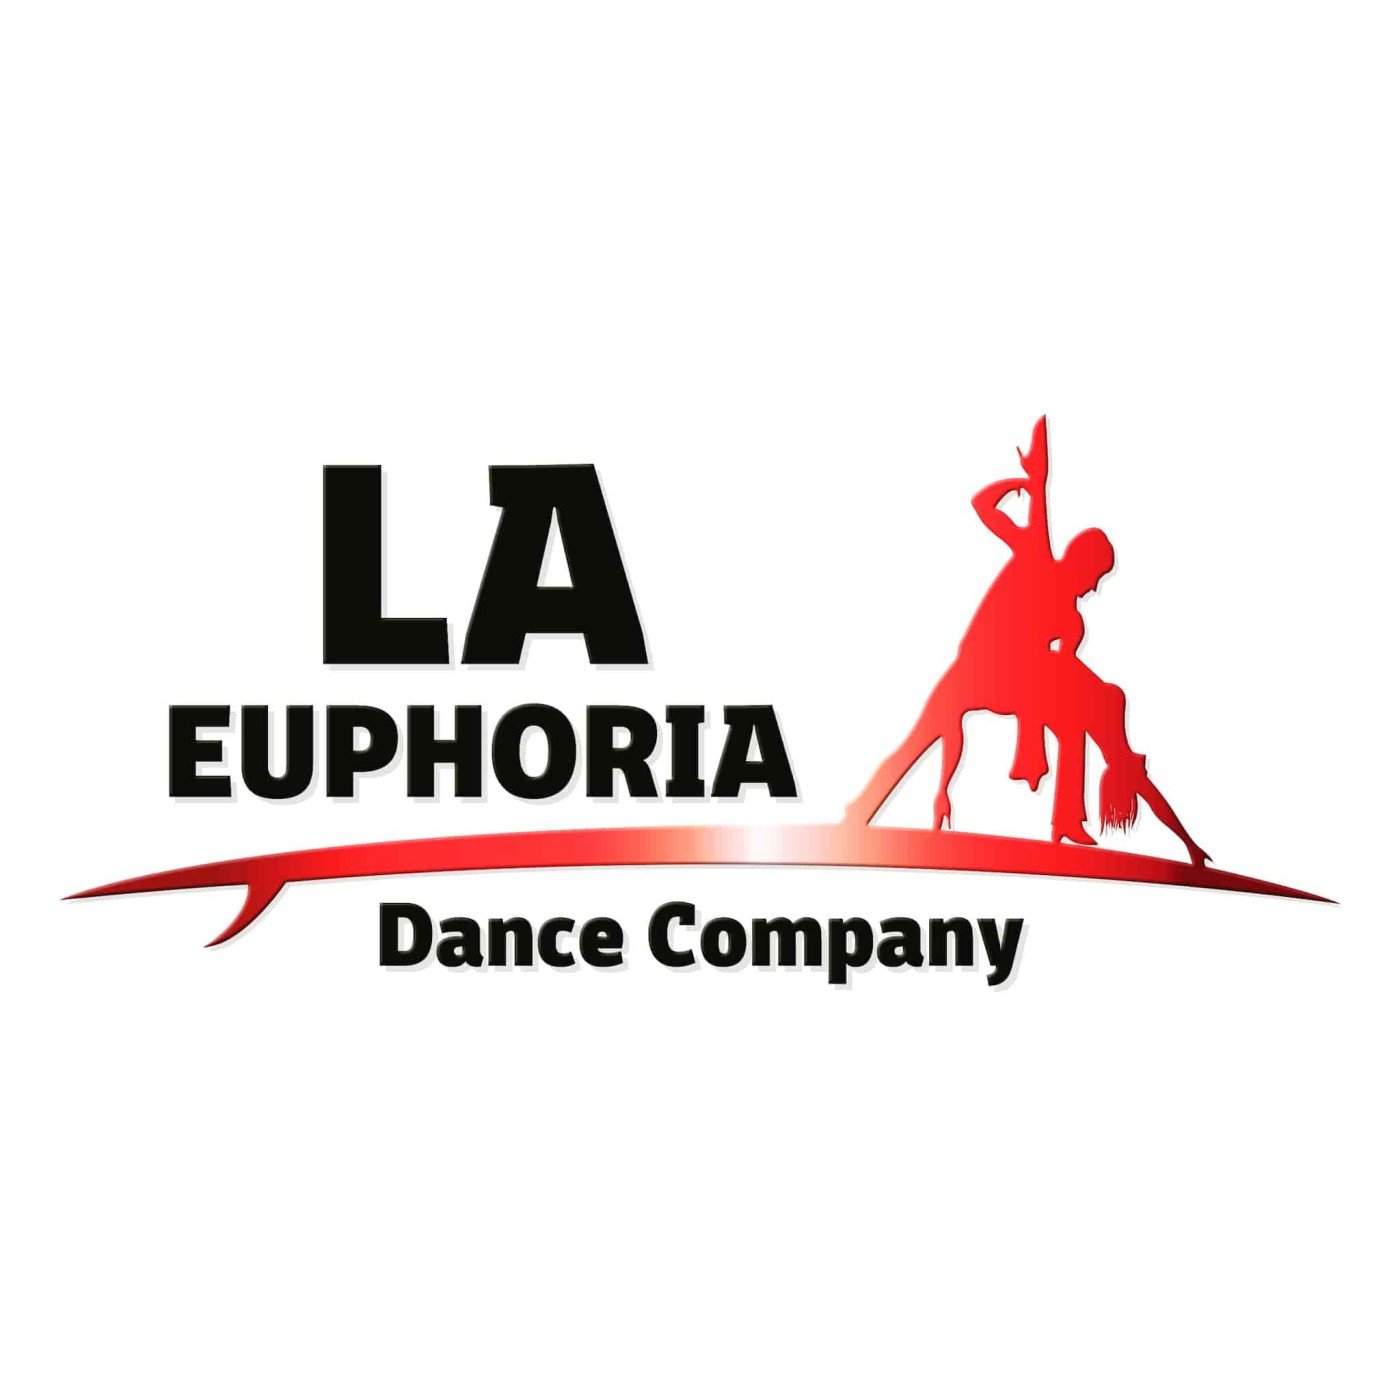   La Euphoria Dance Company 